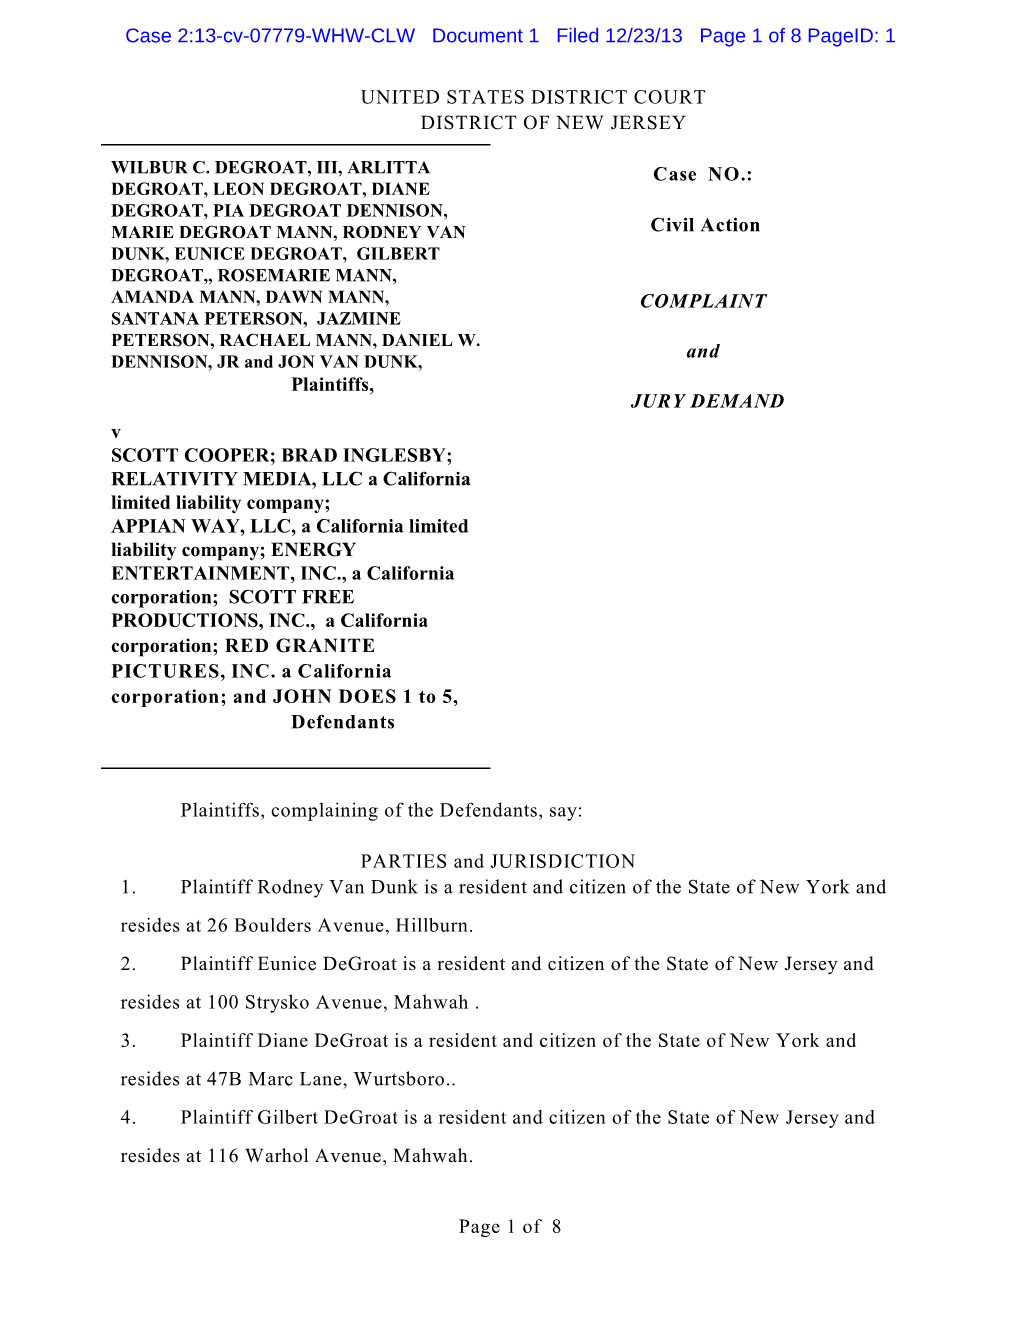 Page 1 of 8 UNITED STATES DISTRICT COURT DISTRICT of NEW JERSEY Case NO.: Civil Action COMPLAINT and JURY DEMAND Plaintiffs, C